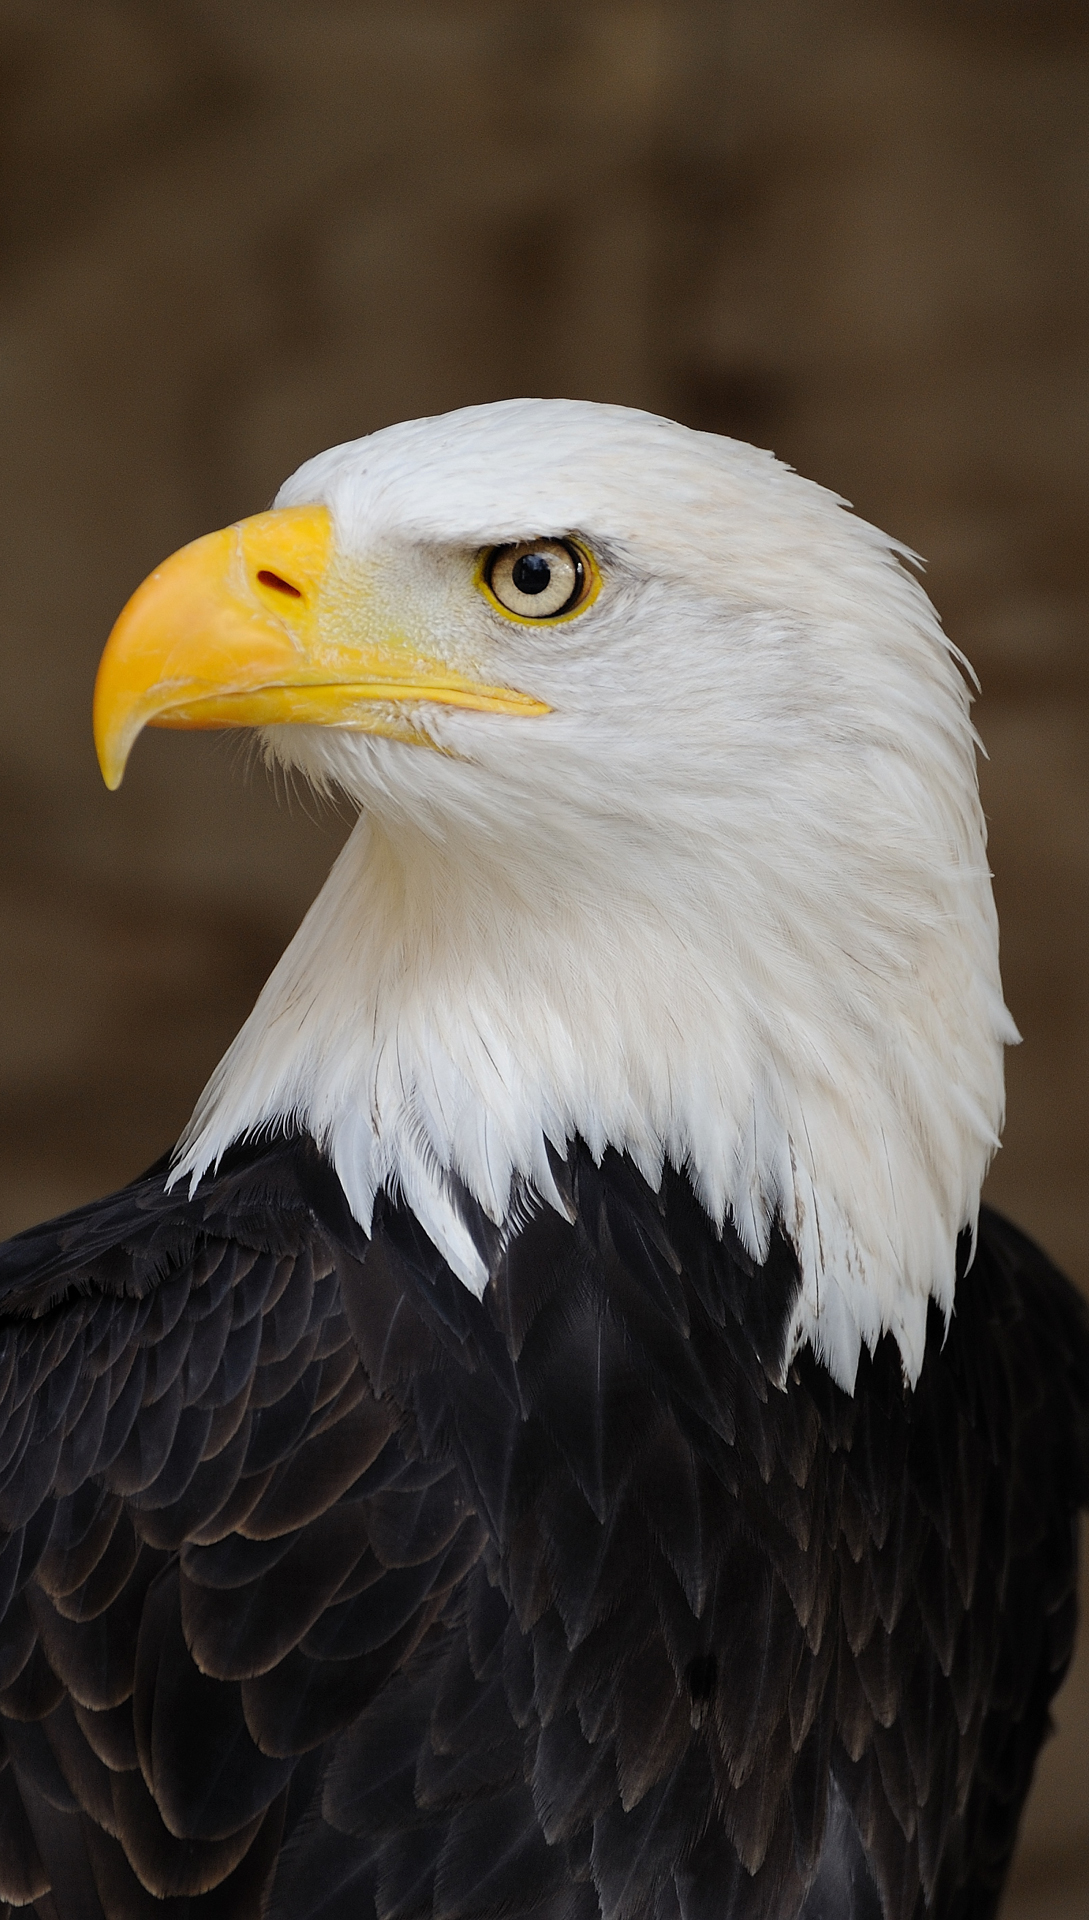 American Eagle Hd Wallpaper American eagle preview